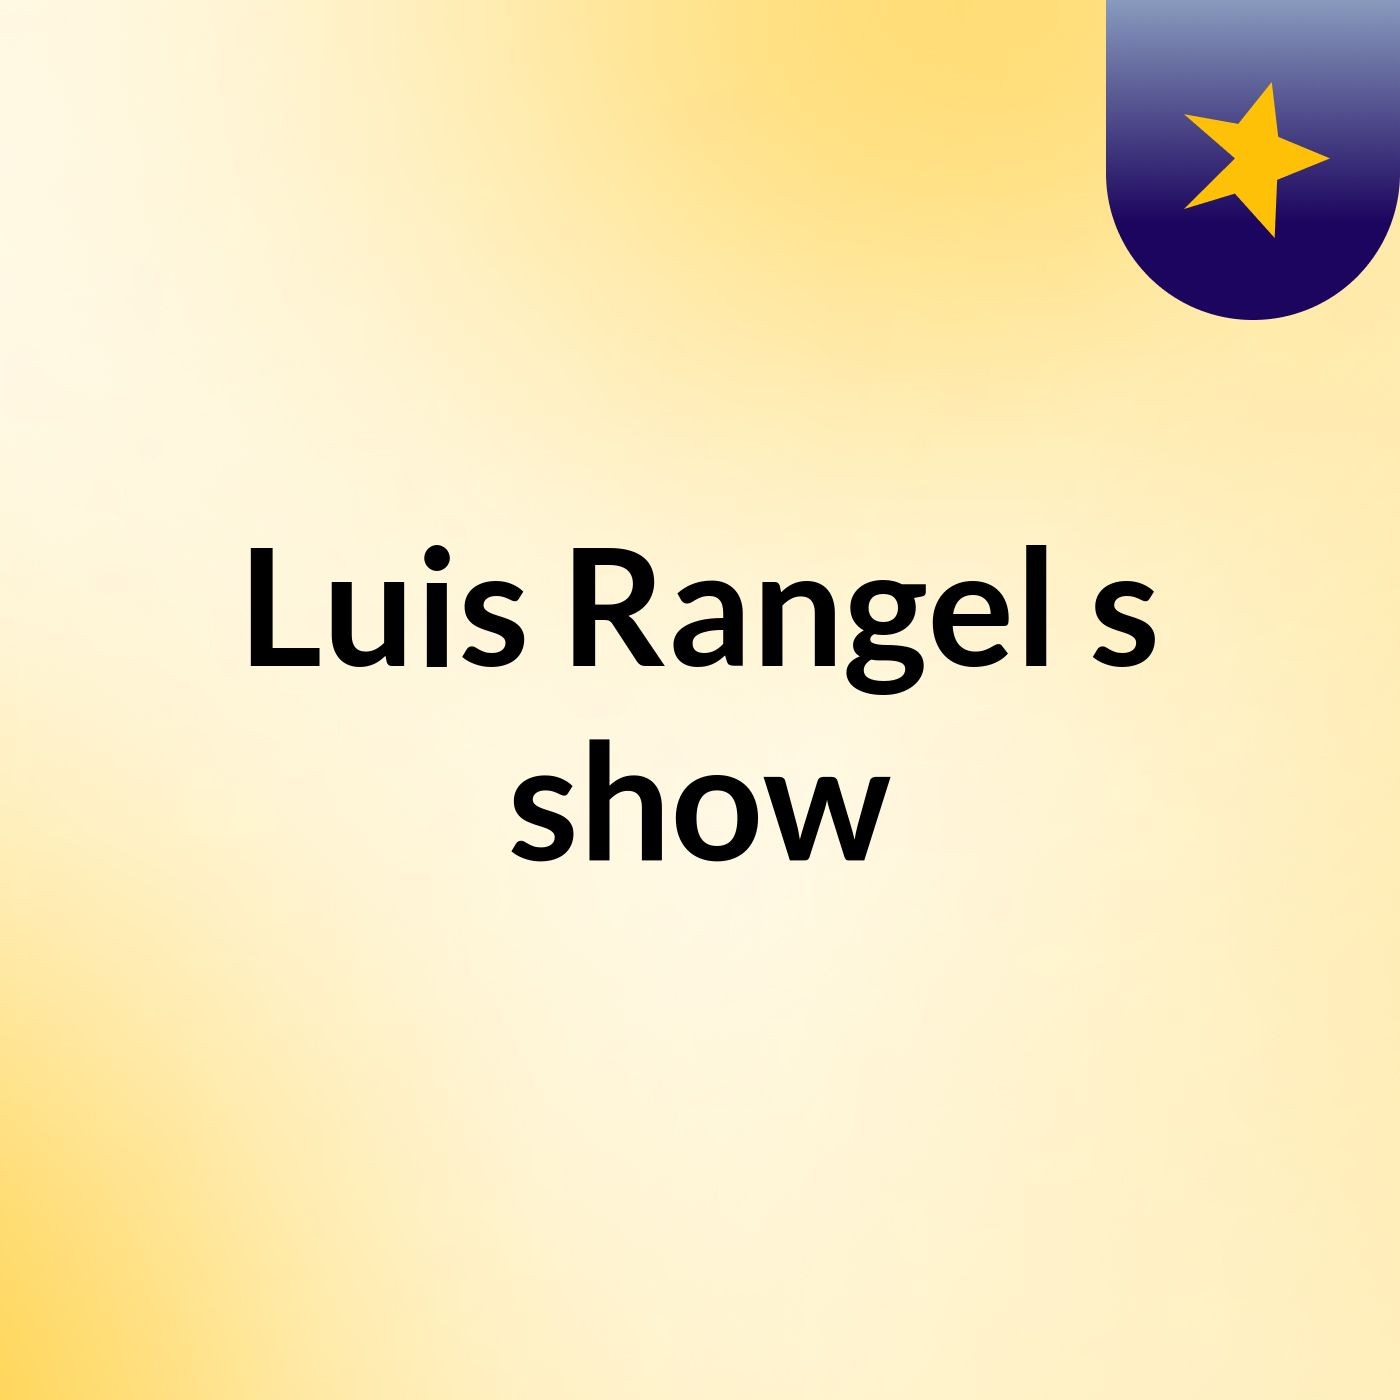 Luis Rangel's show